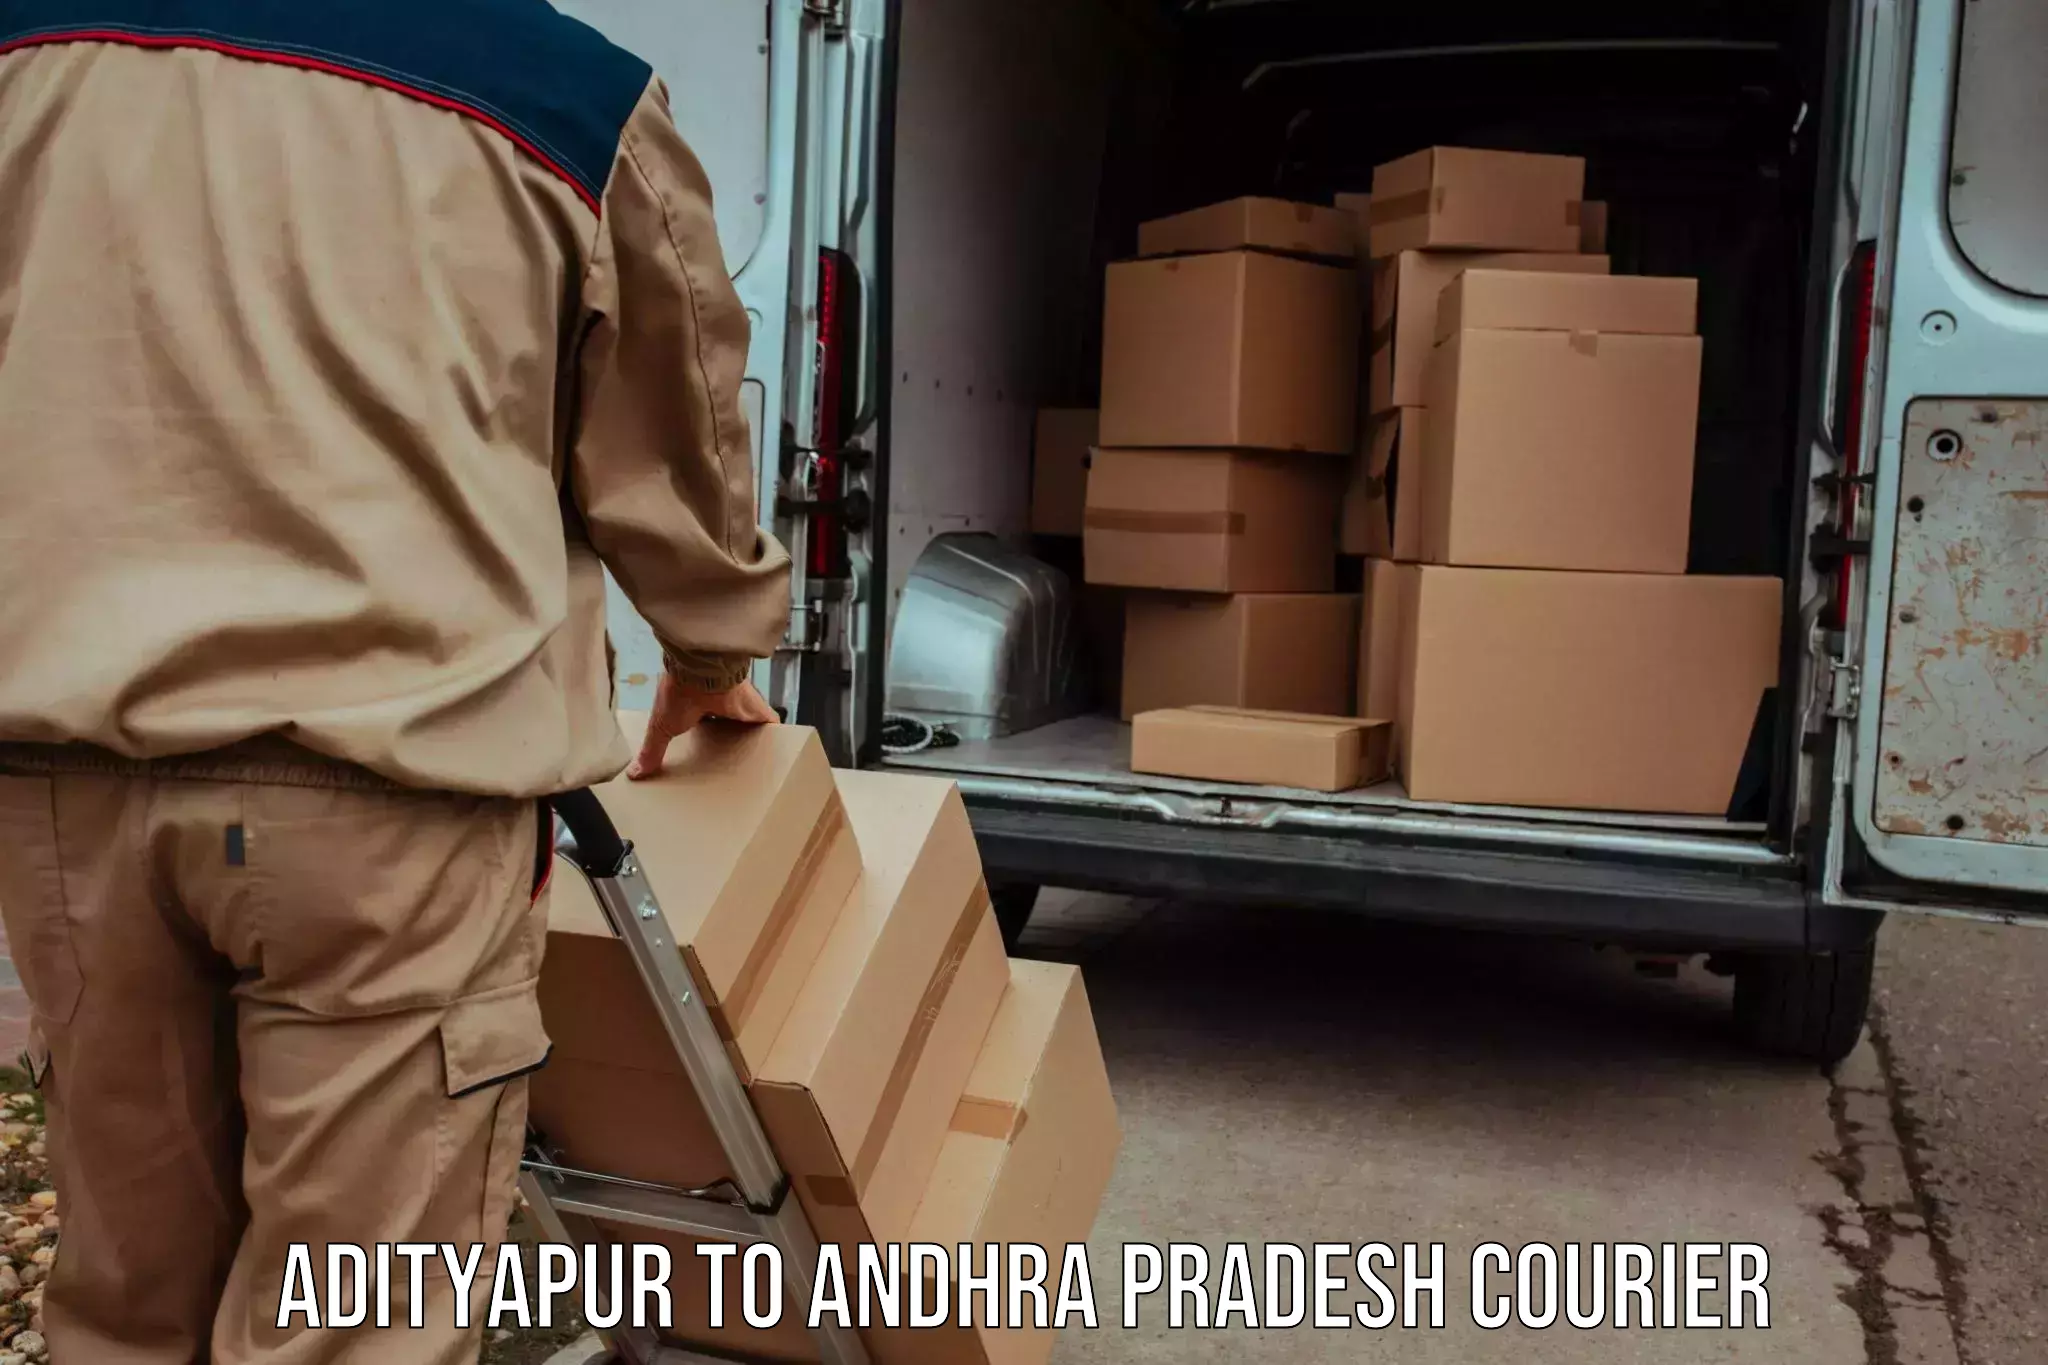 Next-day freight services Adityapur to Visakhapatnam Port